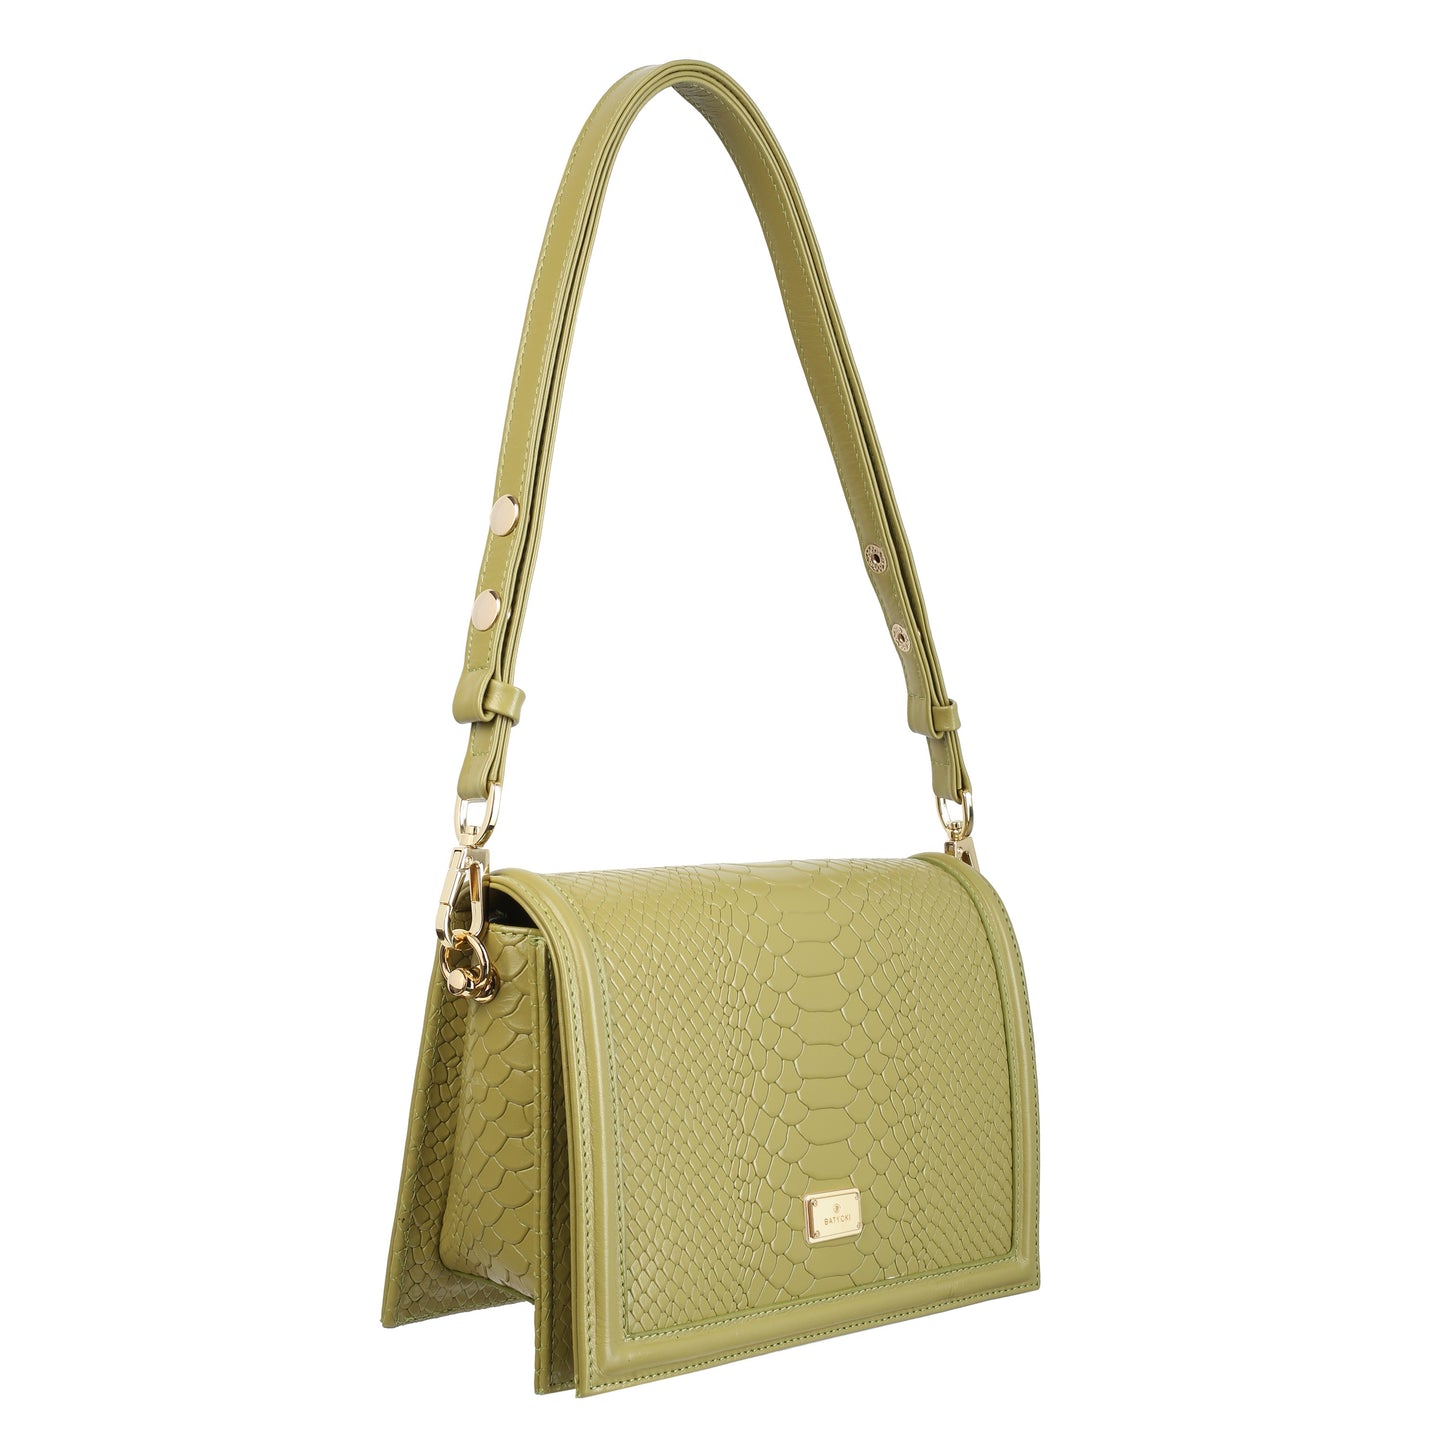 MAYA OLIVE women's leather handbag